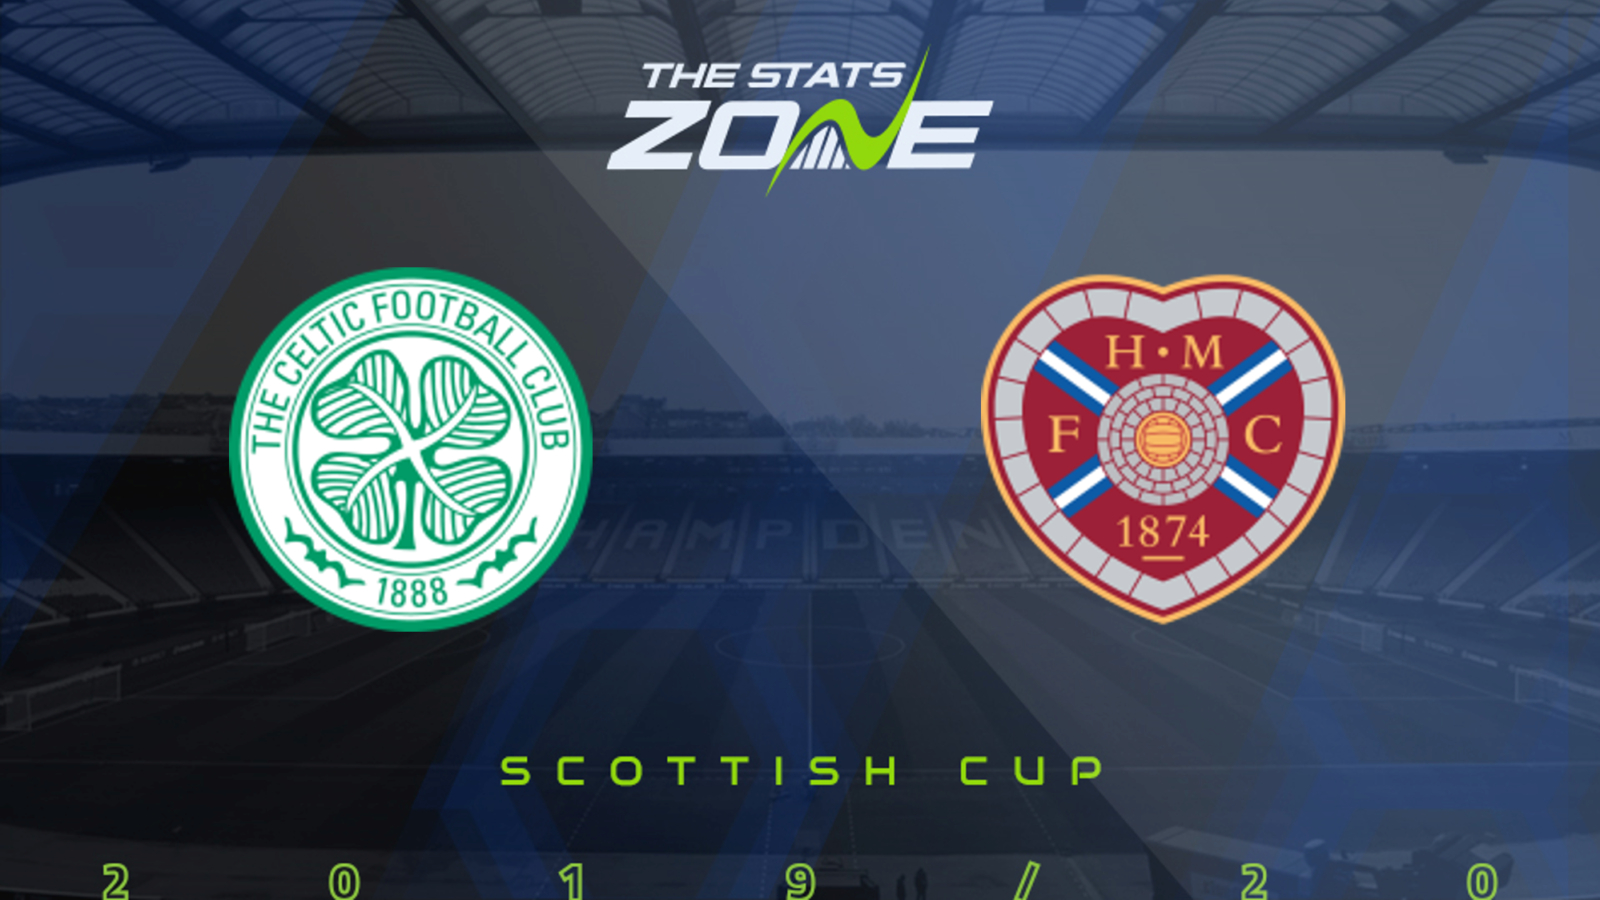 2019-20 Scottish Cup Final – Celtic vs Hearts Preview & Prediction